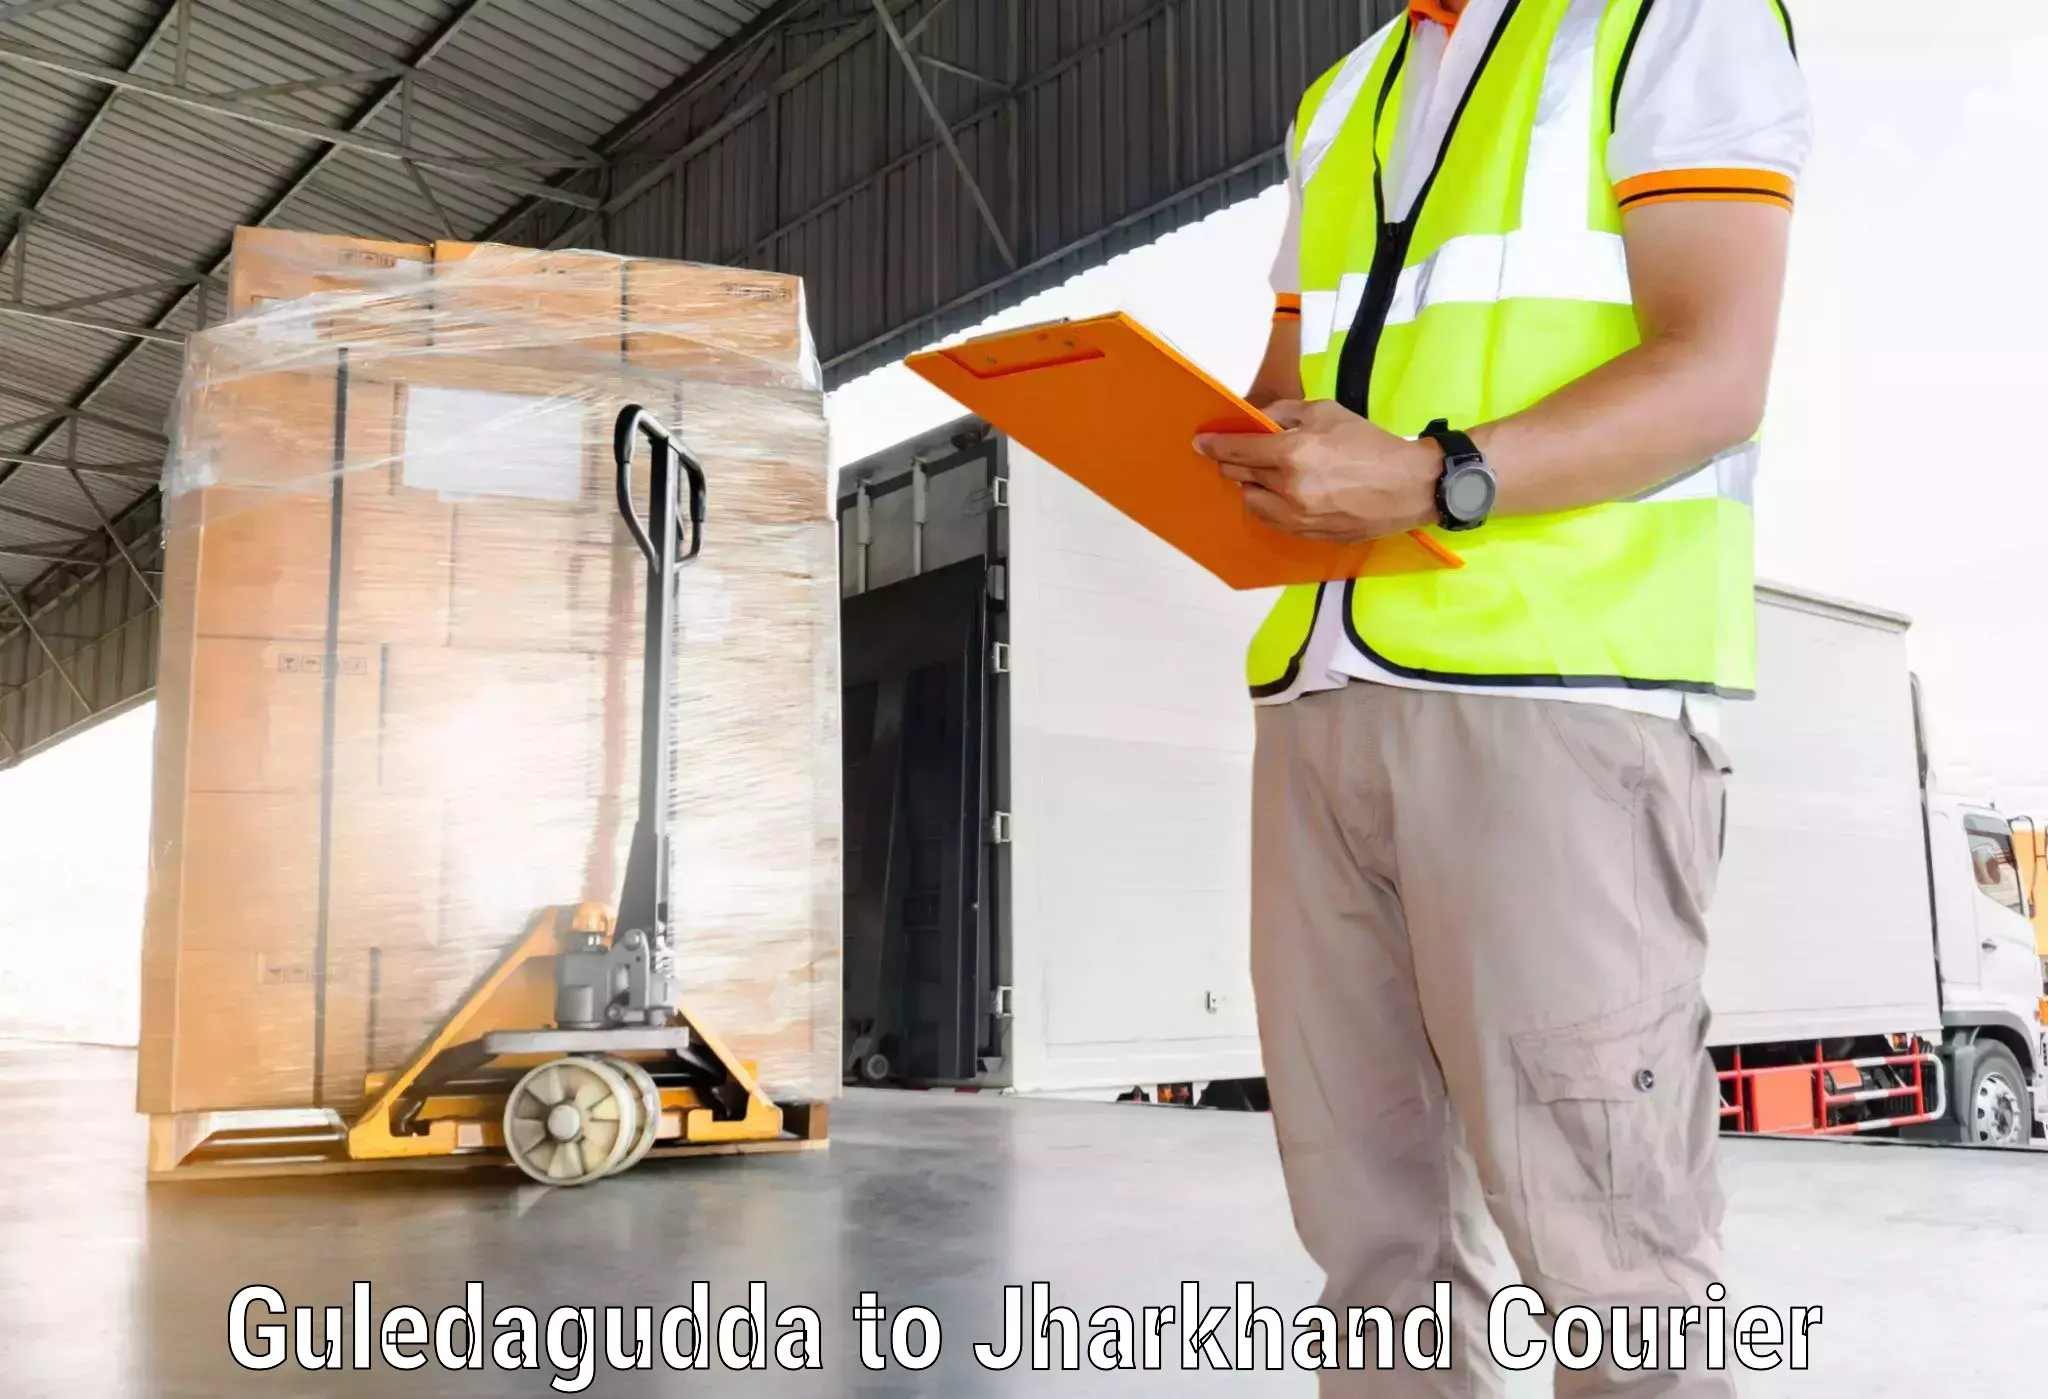 State-of-the-art courier technology Guledagudda to Mahagama